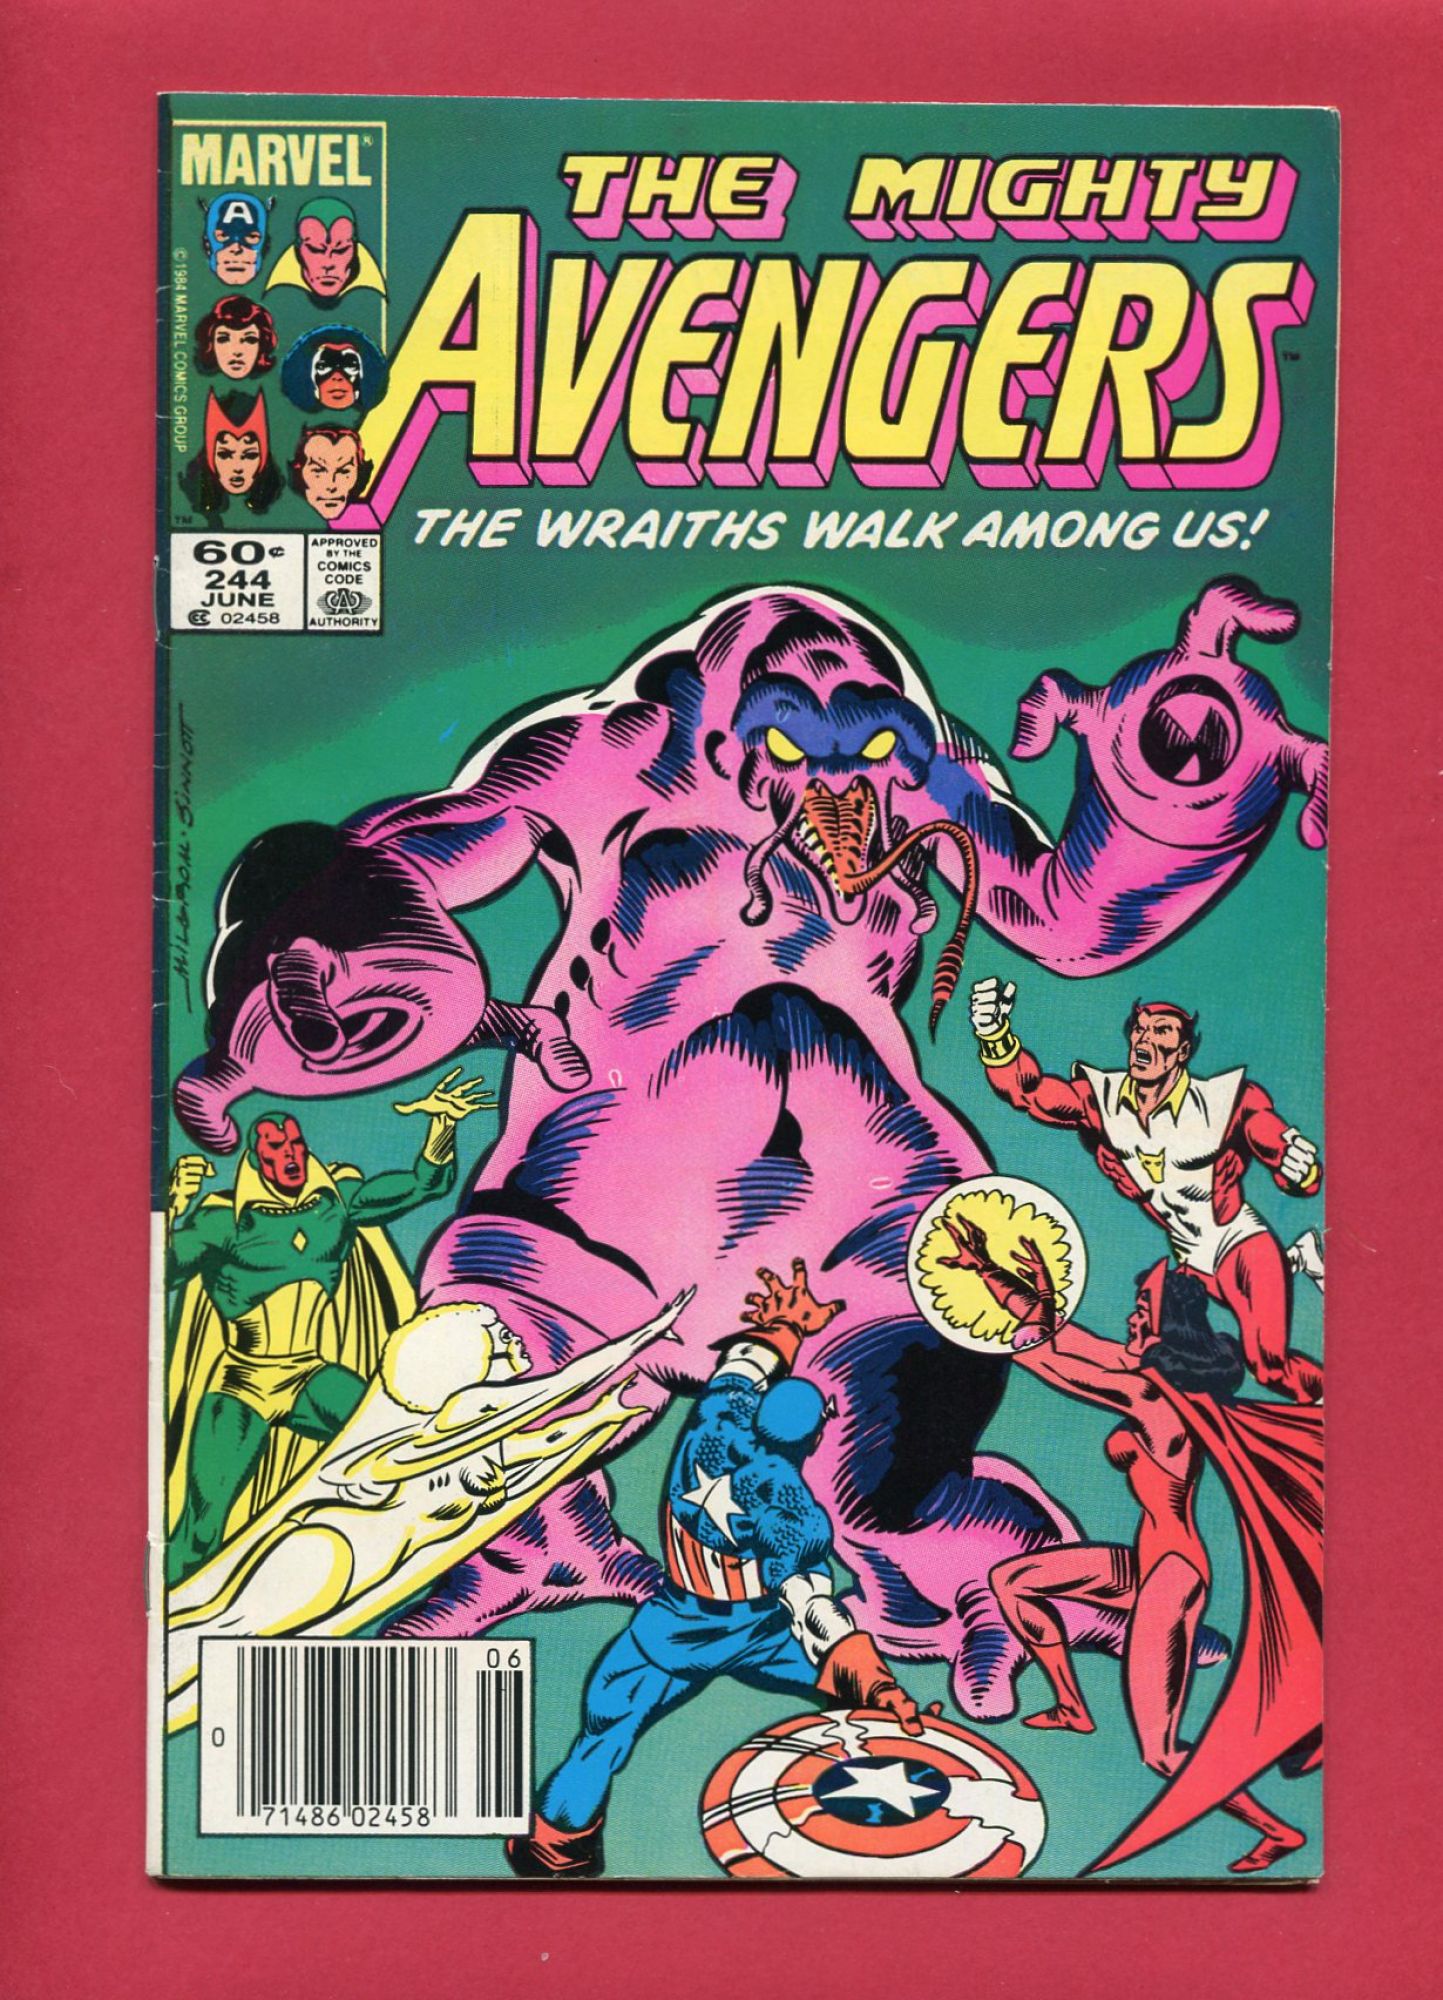 Avengers #244, Jun 1984, 8.0 VF